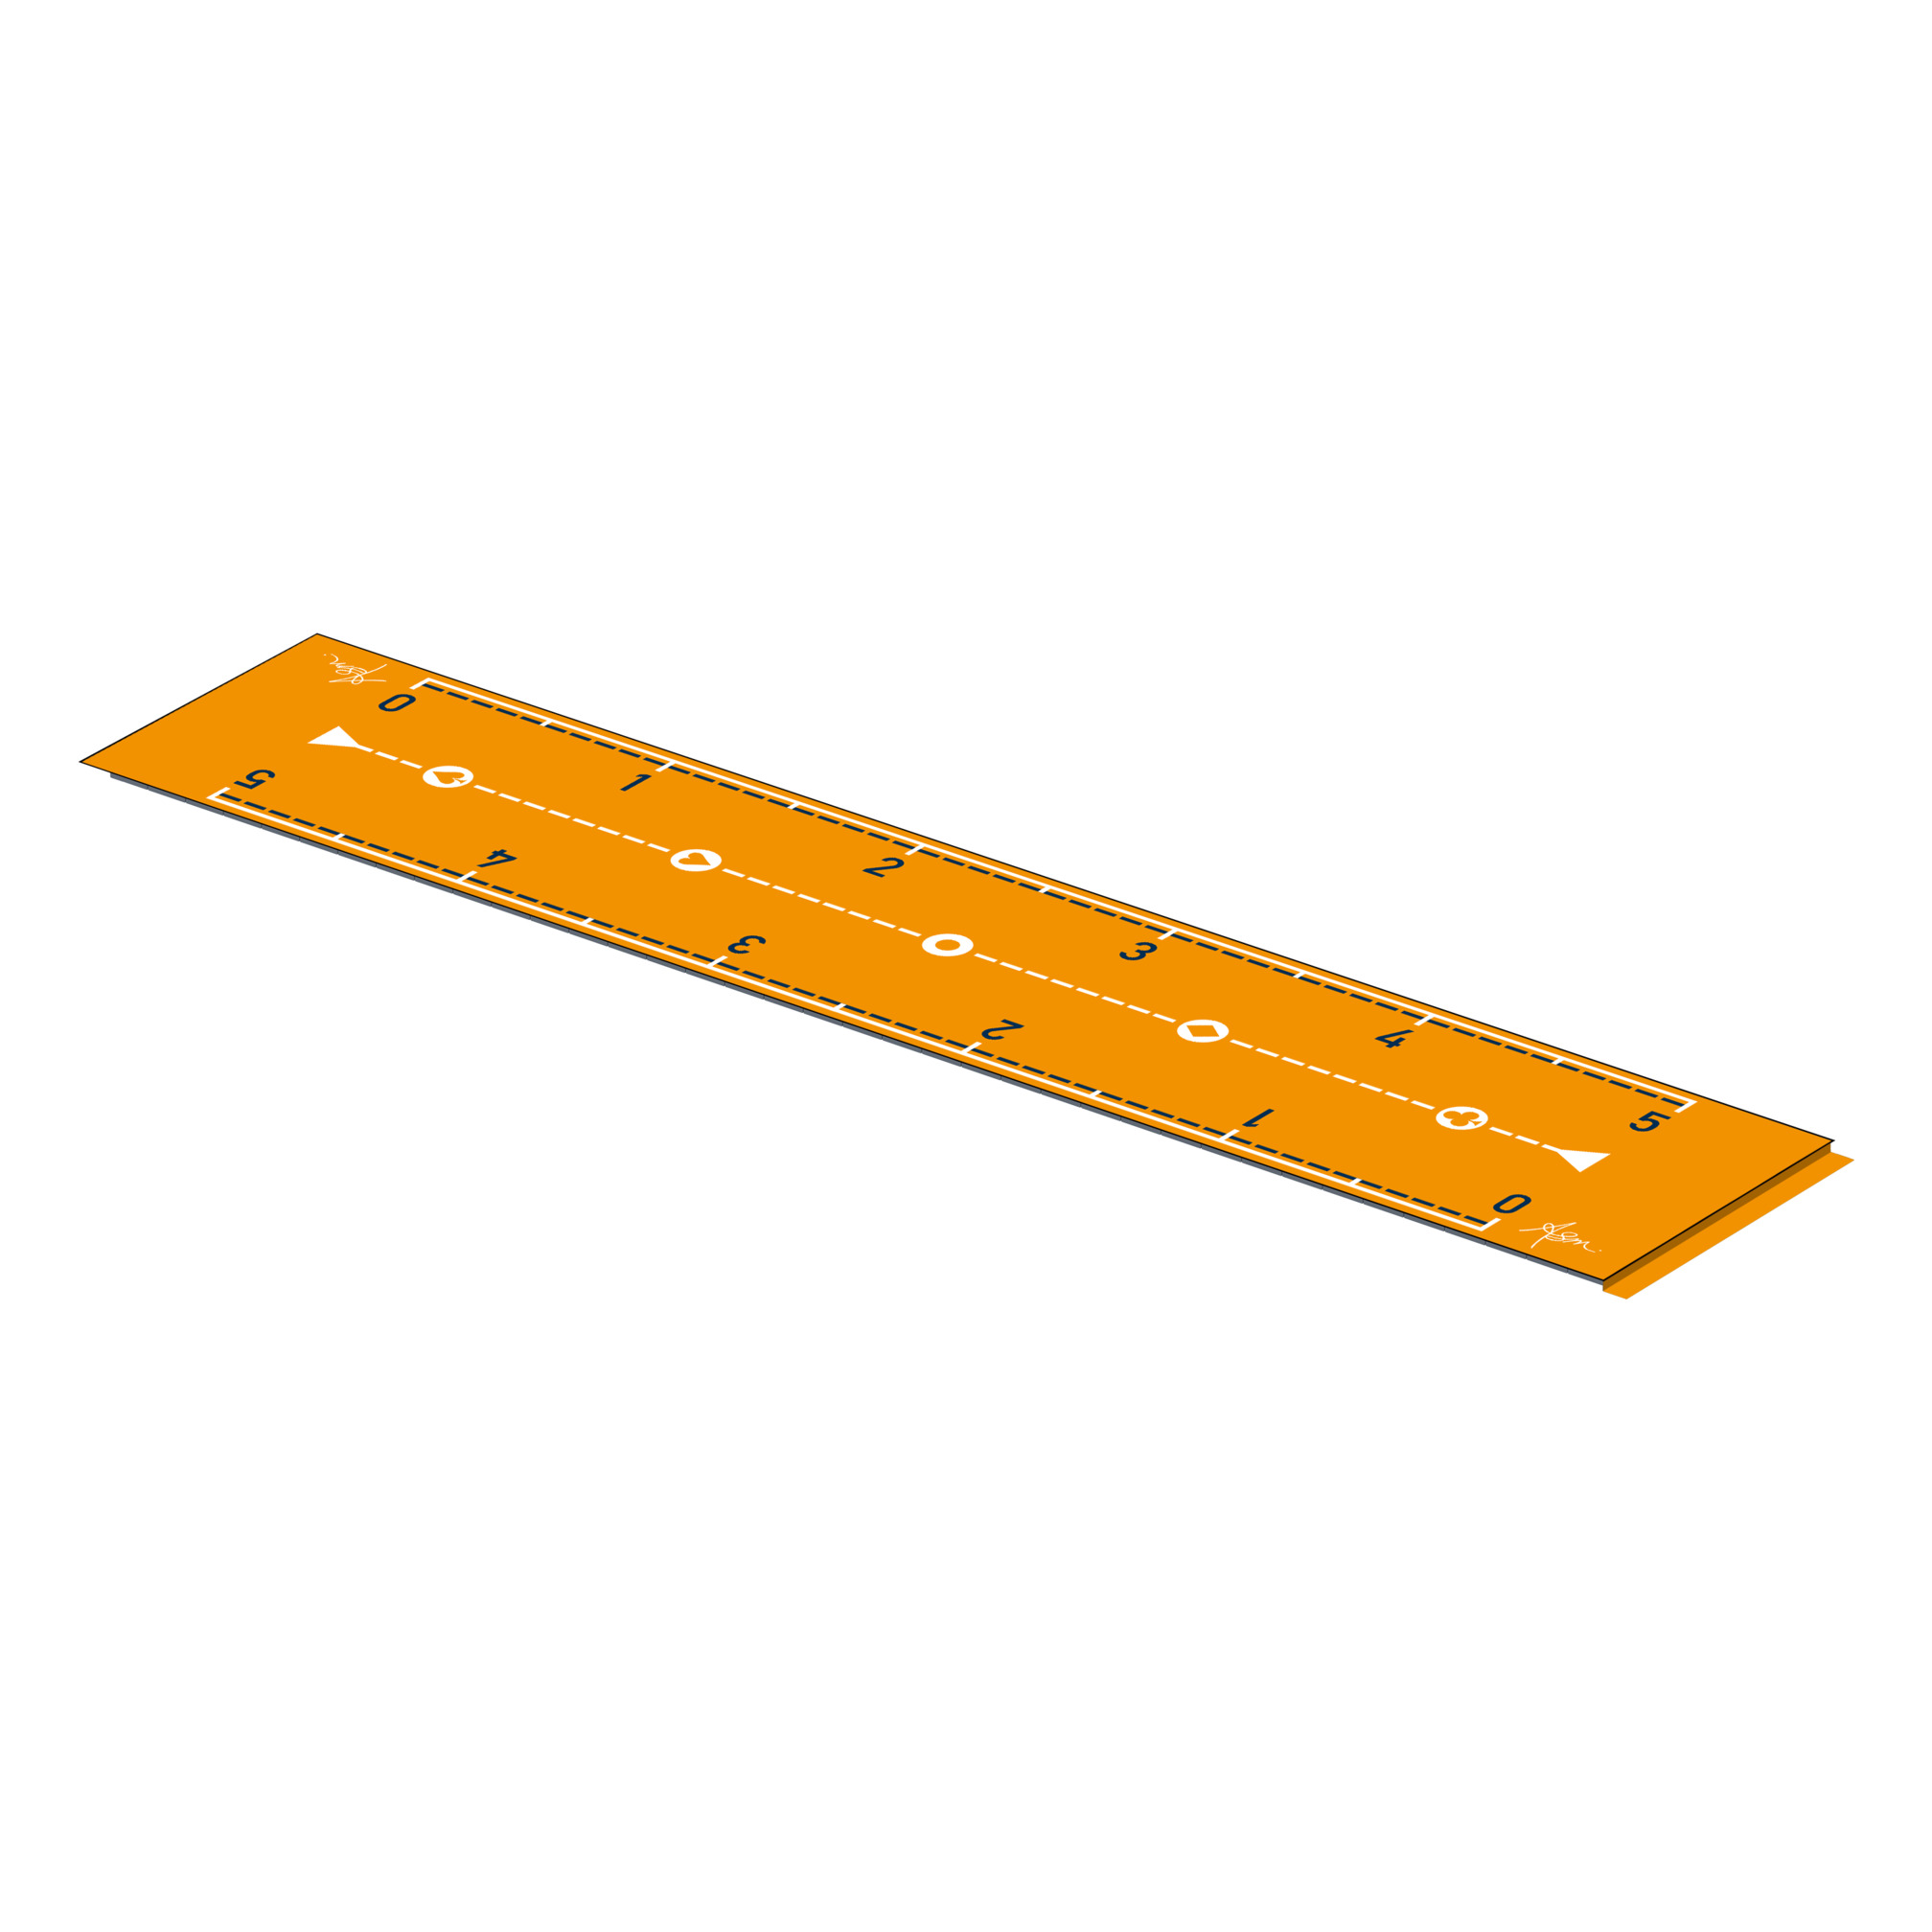 ASM long mat Ruler 6 m, sandwich padding